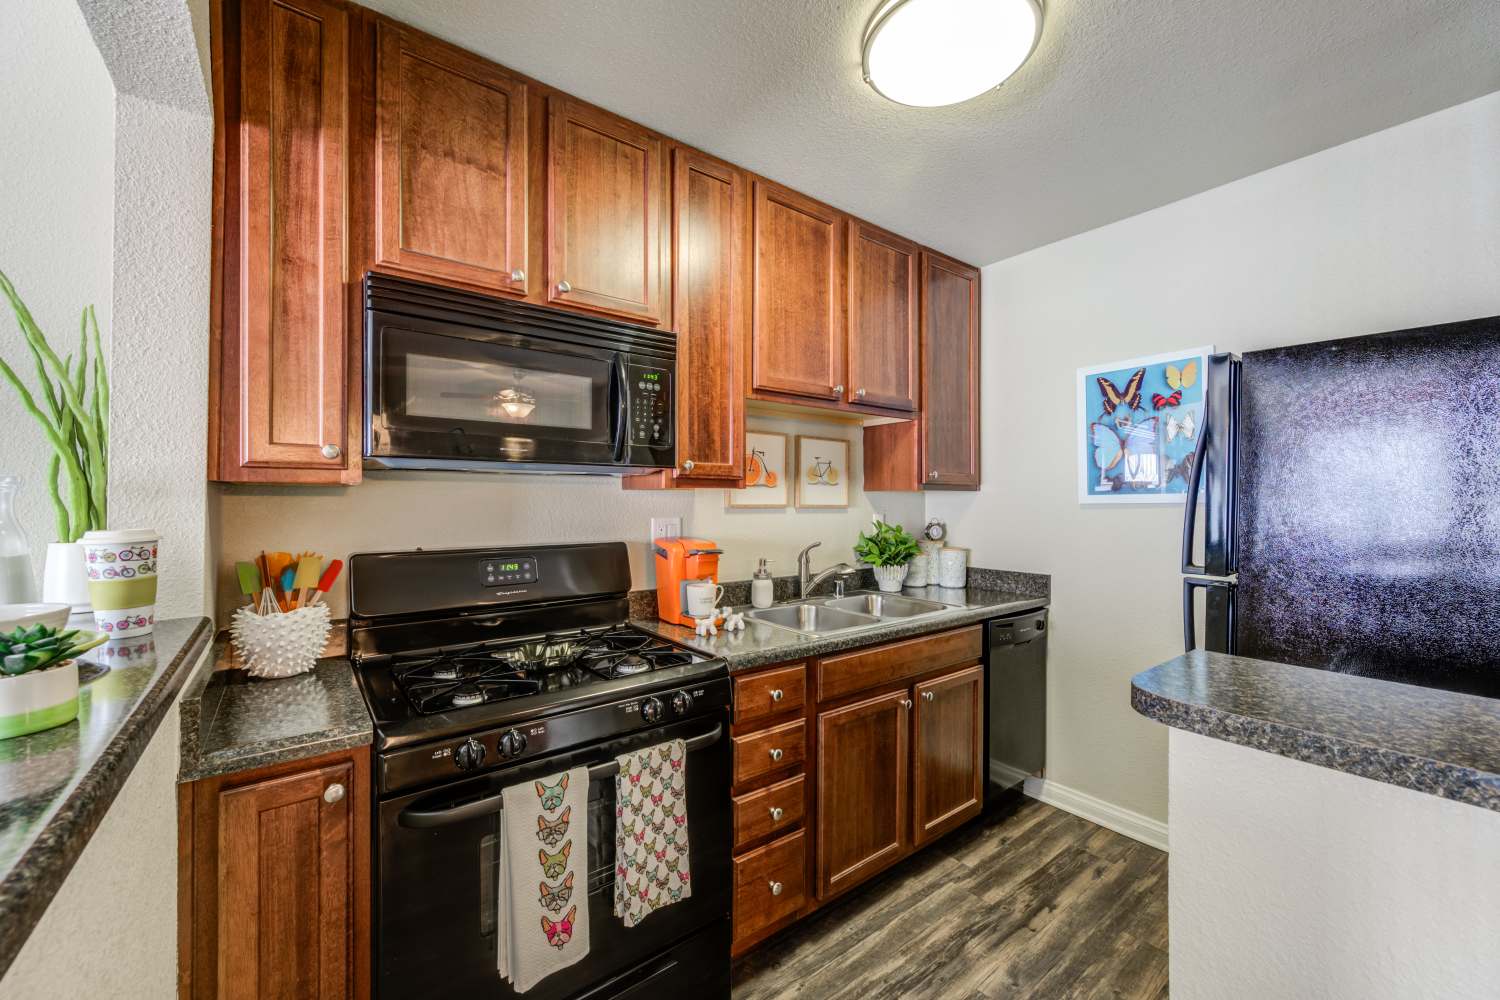 UCA Apartment Homes remodeled kitchen in Fullerton, California